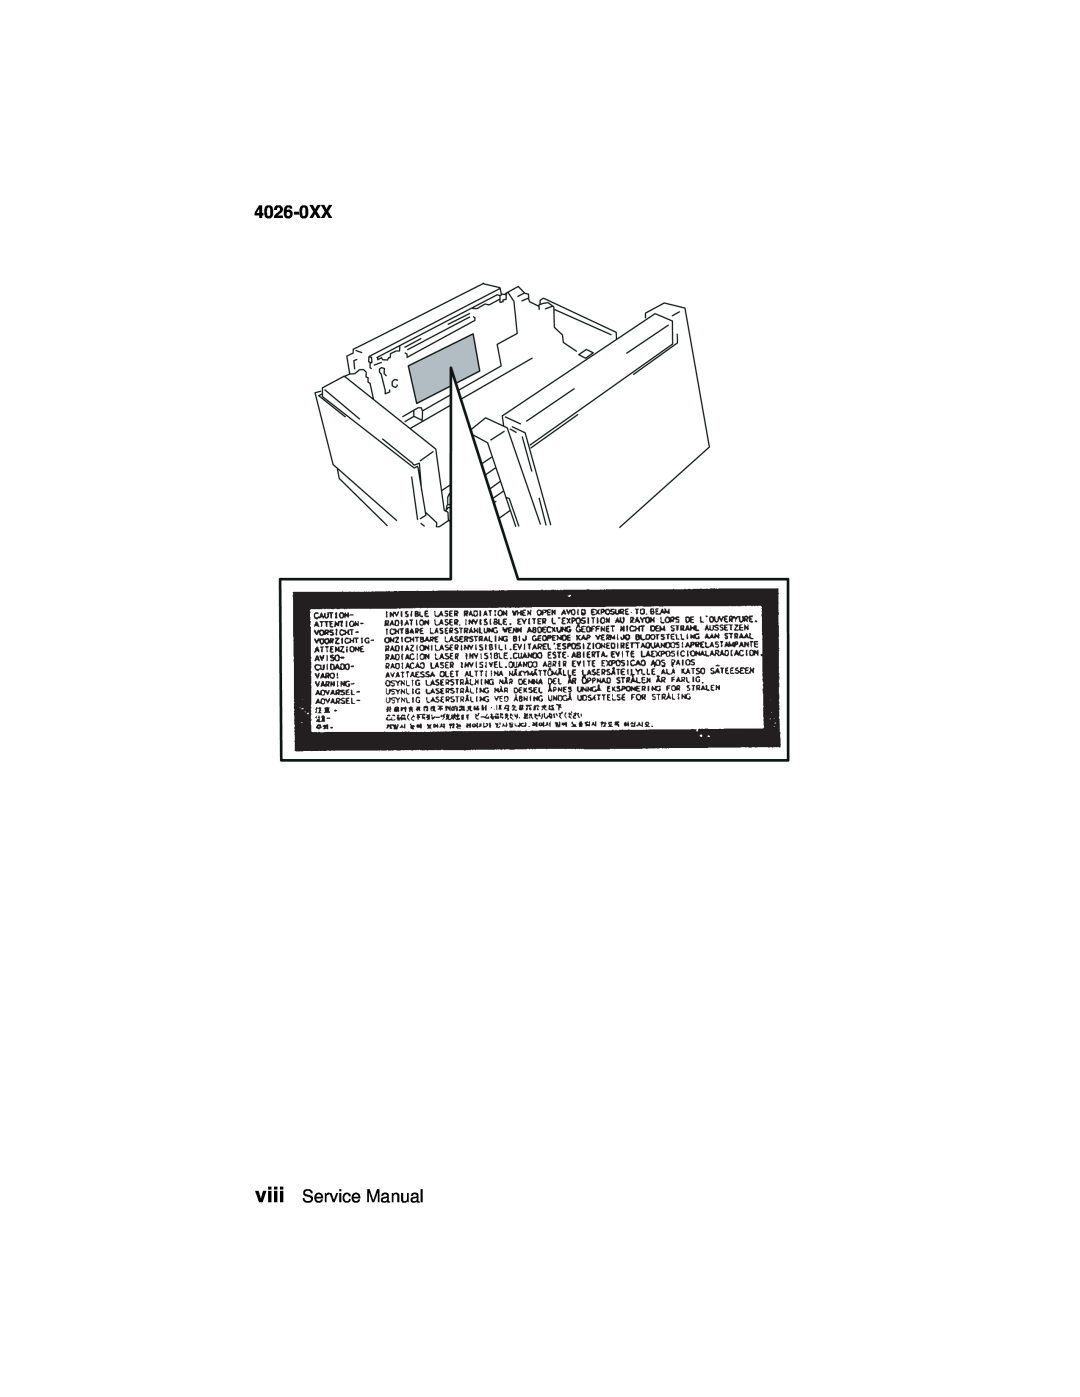 Lexmark OptraTM manual 4026-0XX, viiiService Manual 